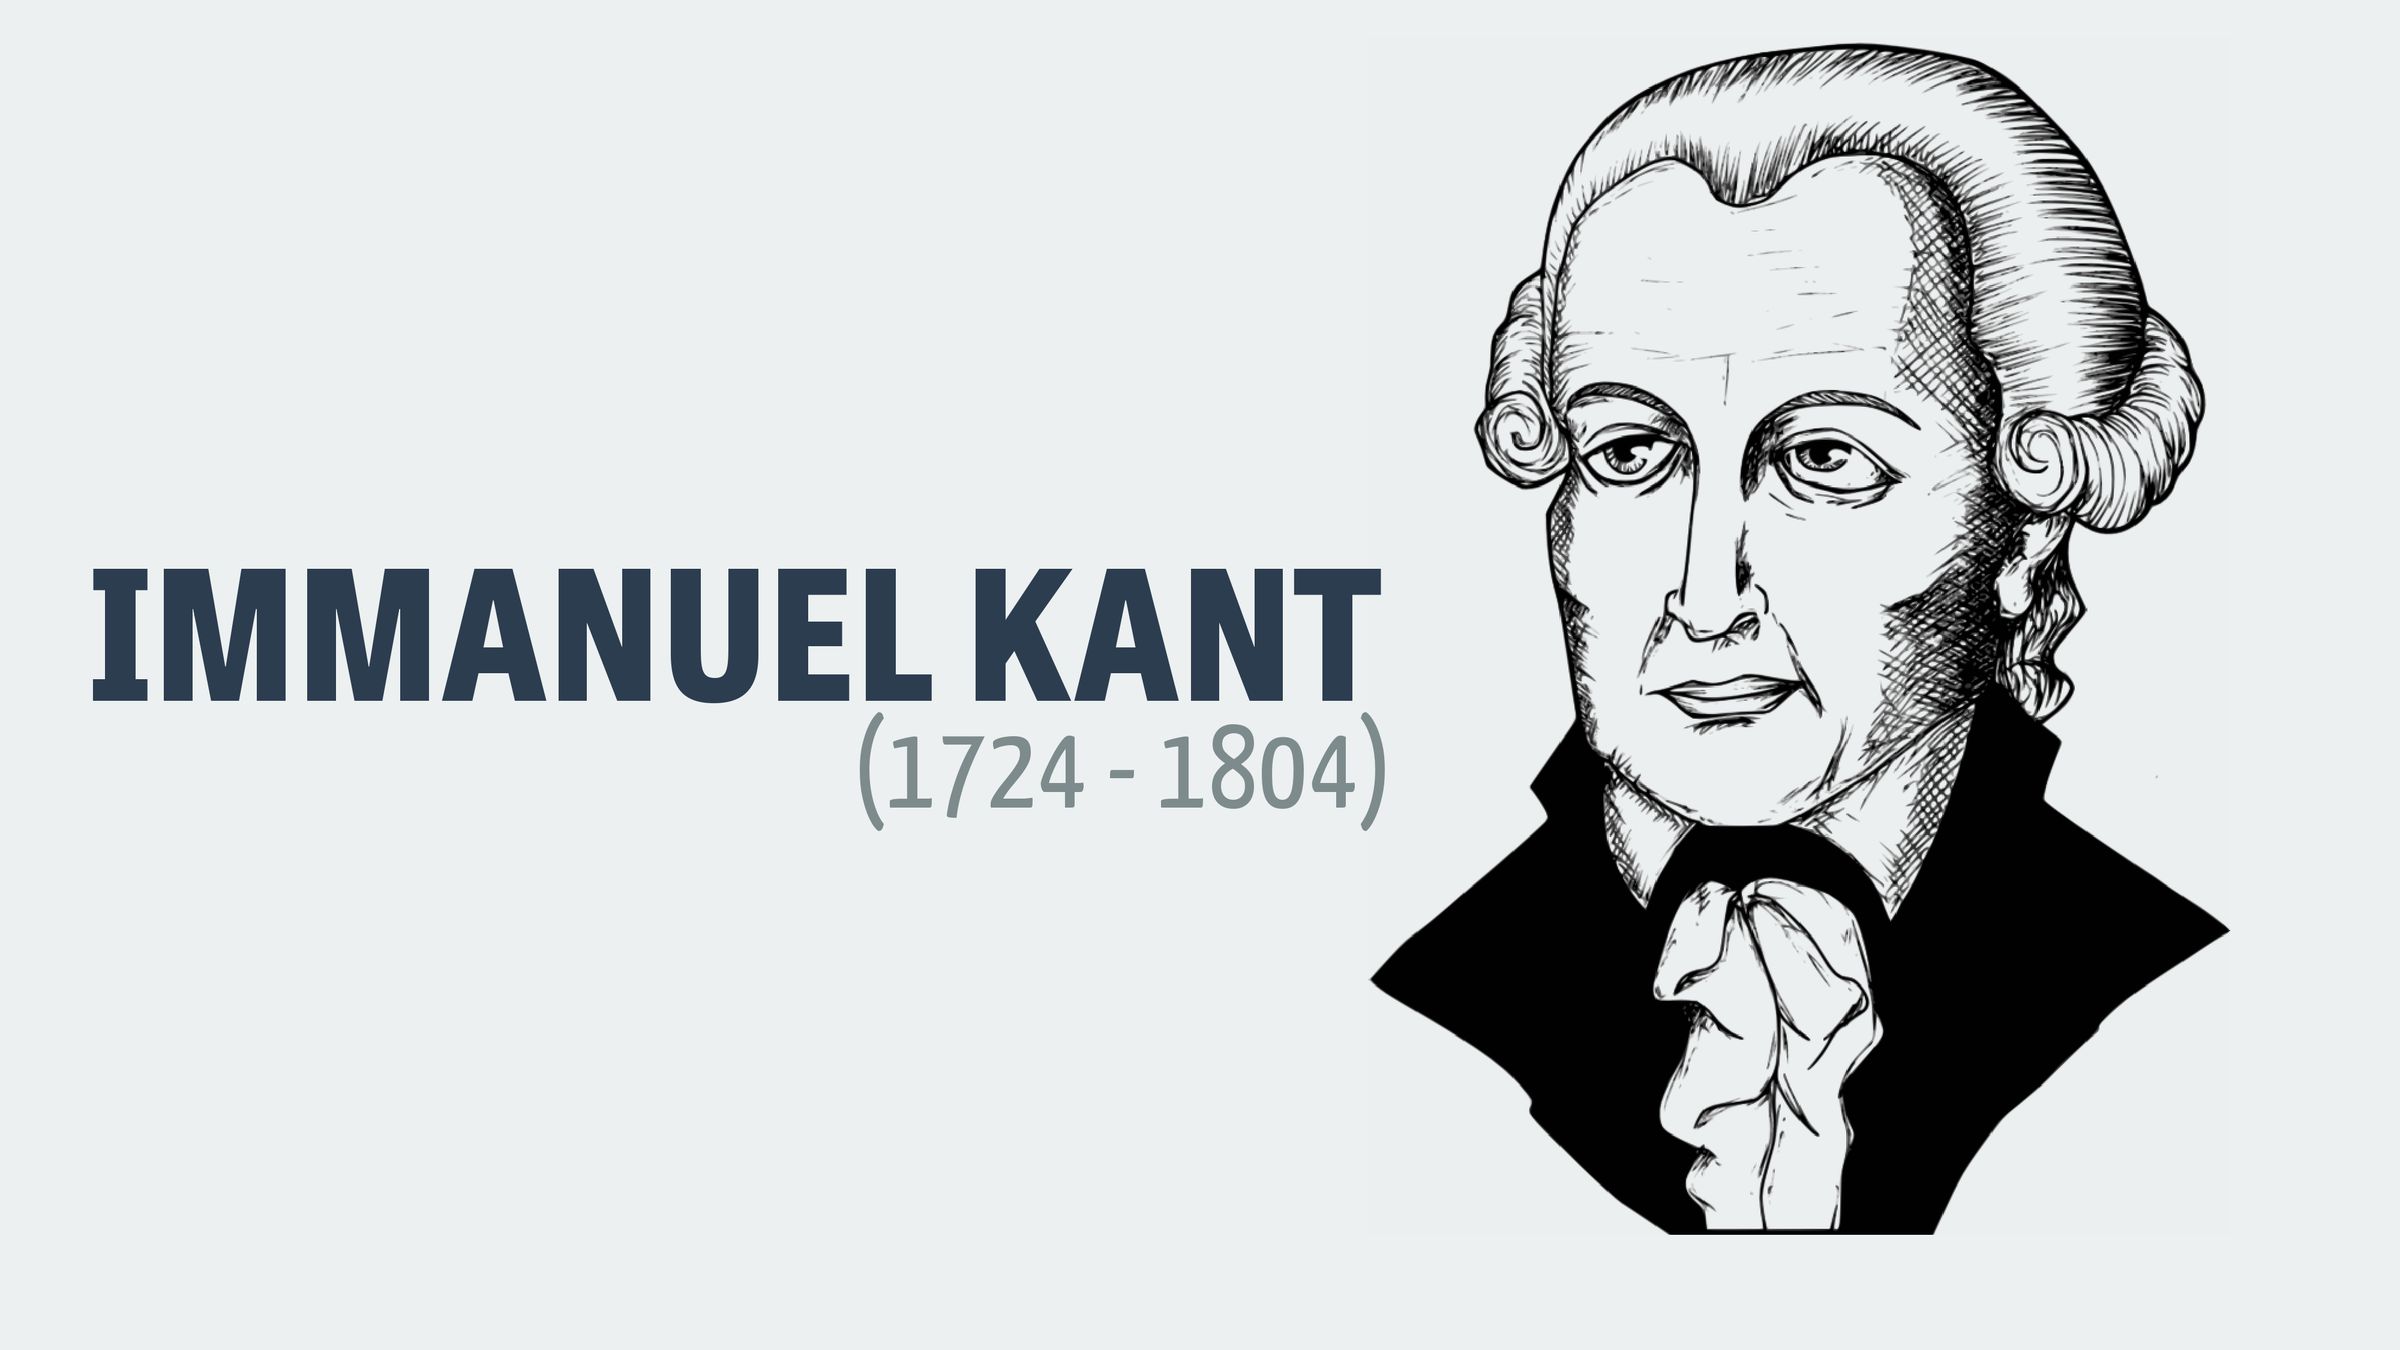 Дж кант. Иммануил кант (1724-1804). Иммануил кант портрет. Кант философ. Иммануил кант улыбается.